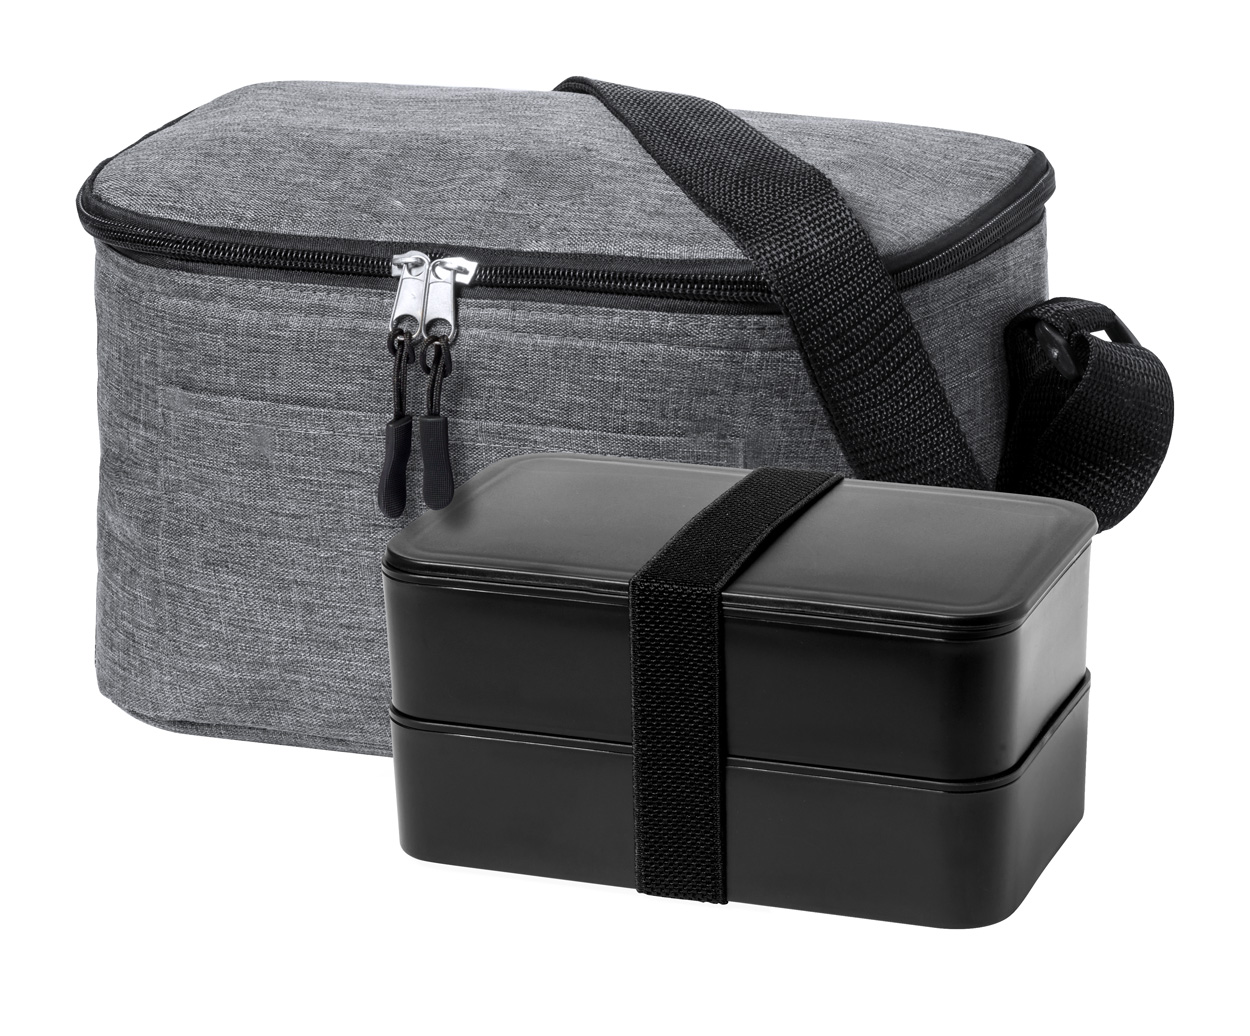 Glaxia cooler bag and lunch box - Grau